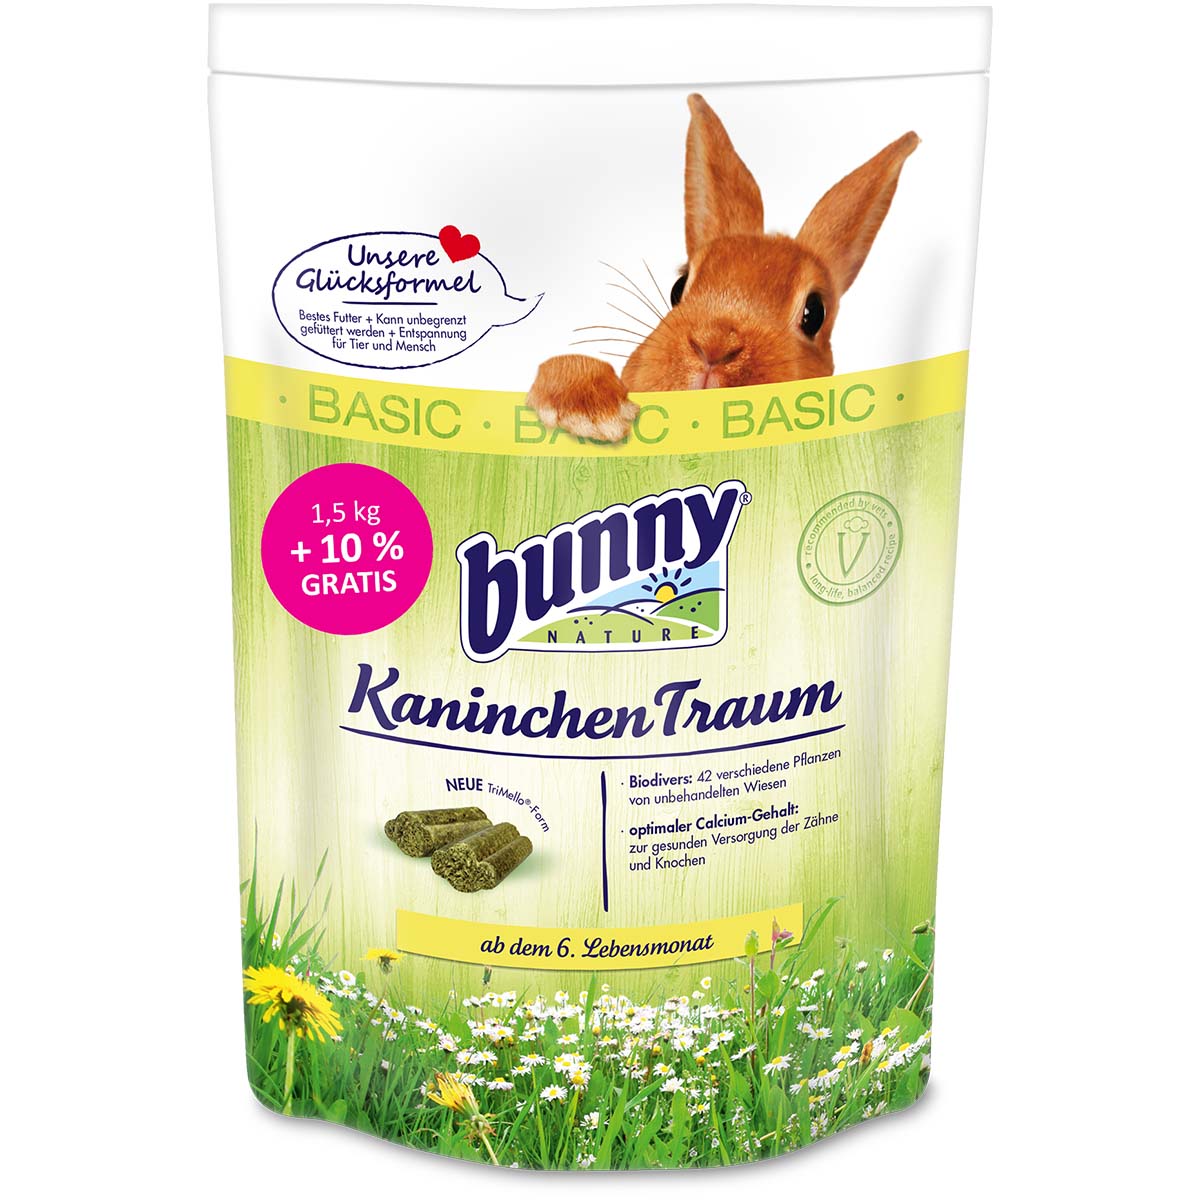 Bunny KaninchenTraum basic 1,5kg + 10% gratis